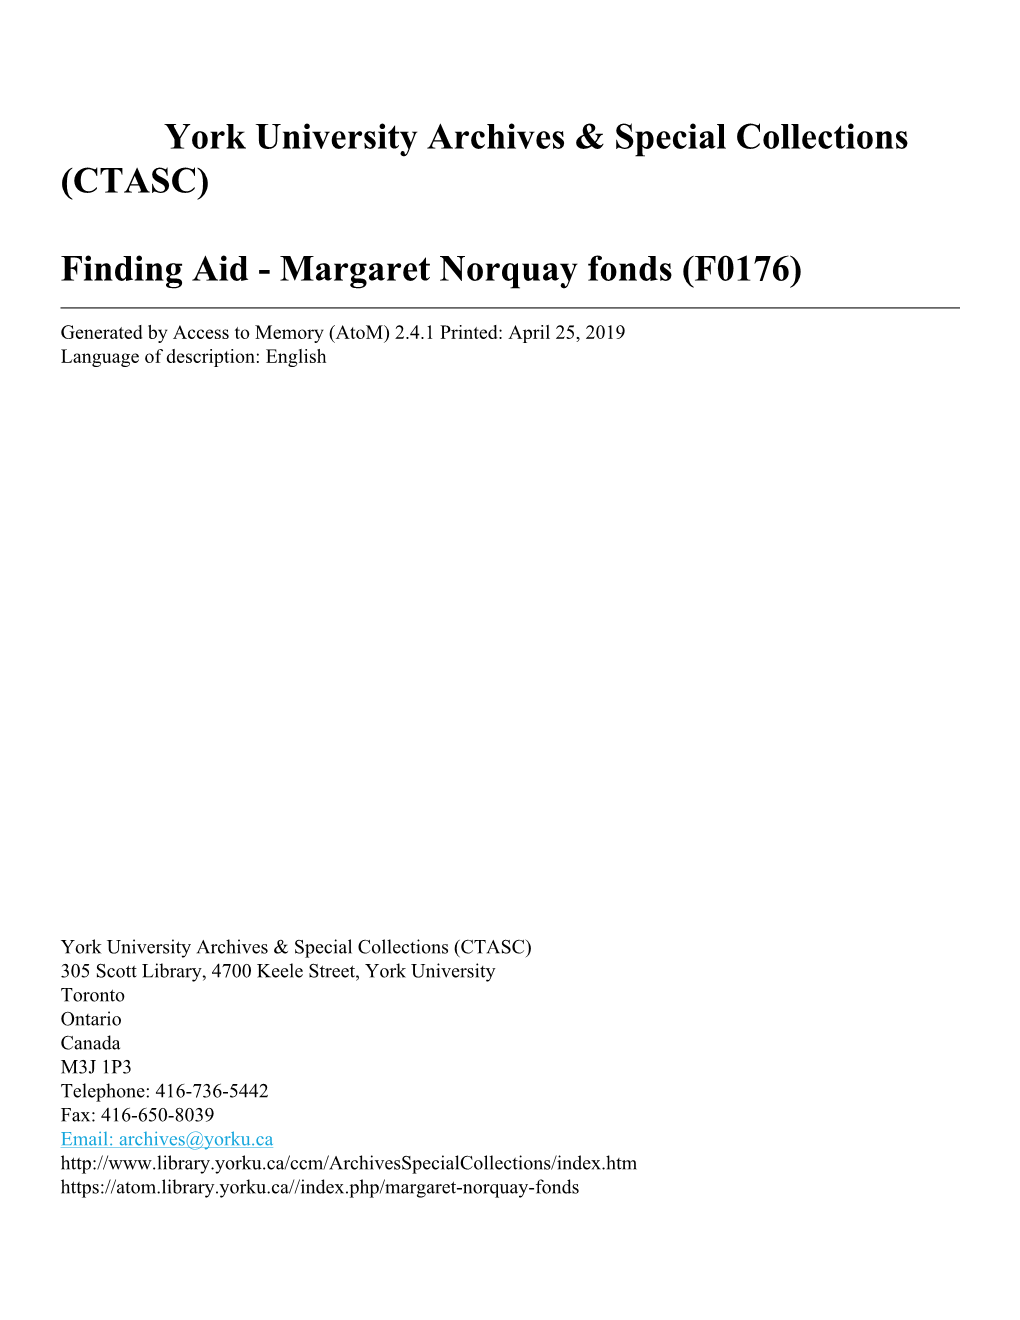 Margaret Norquay Fonds (F0176)